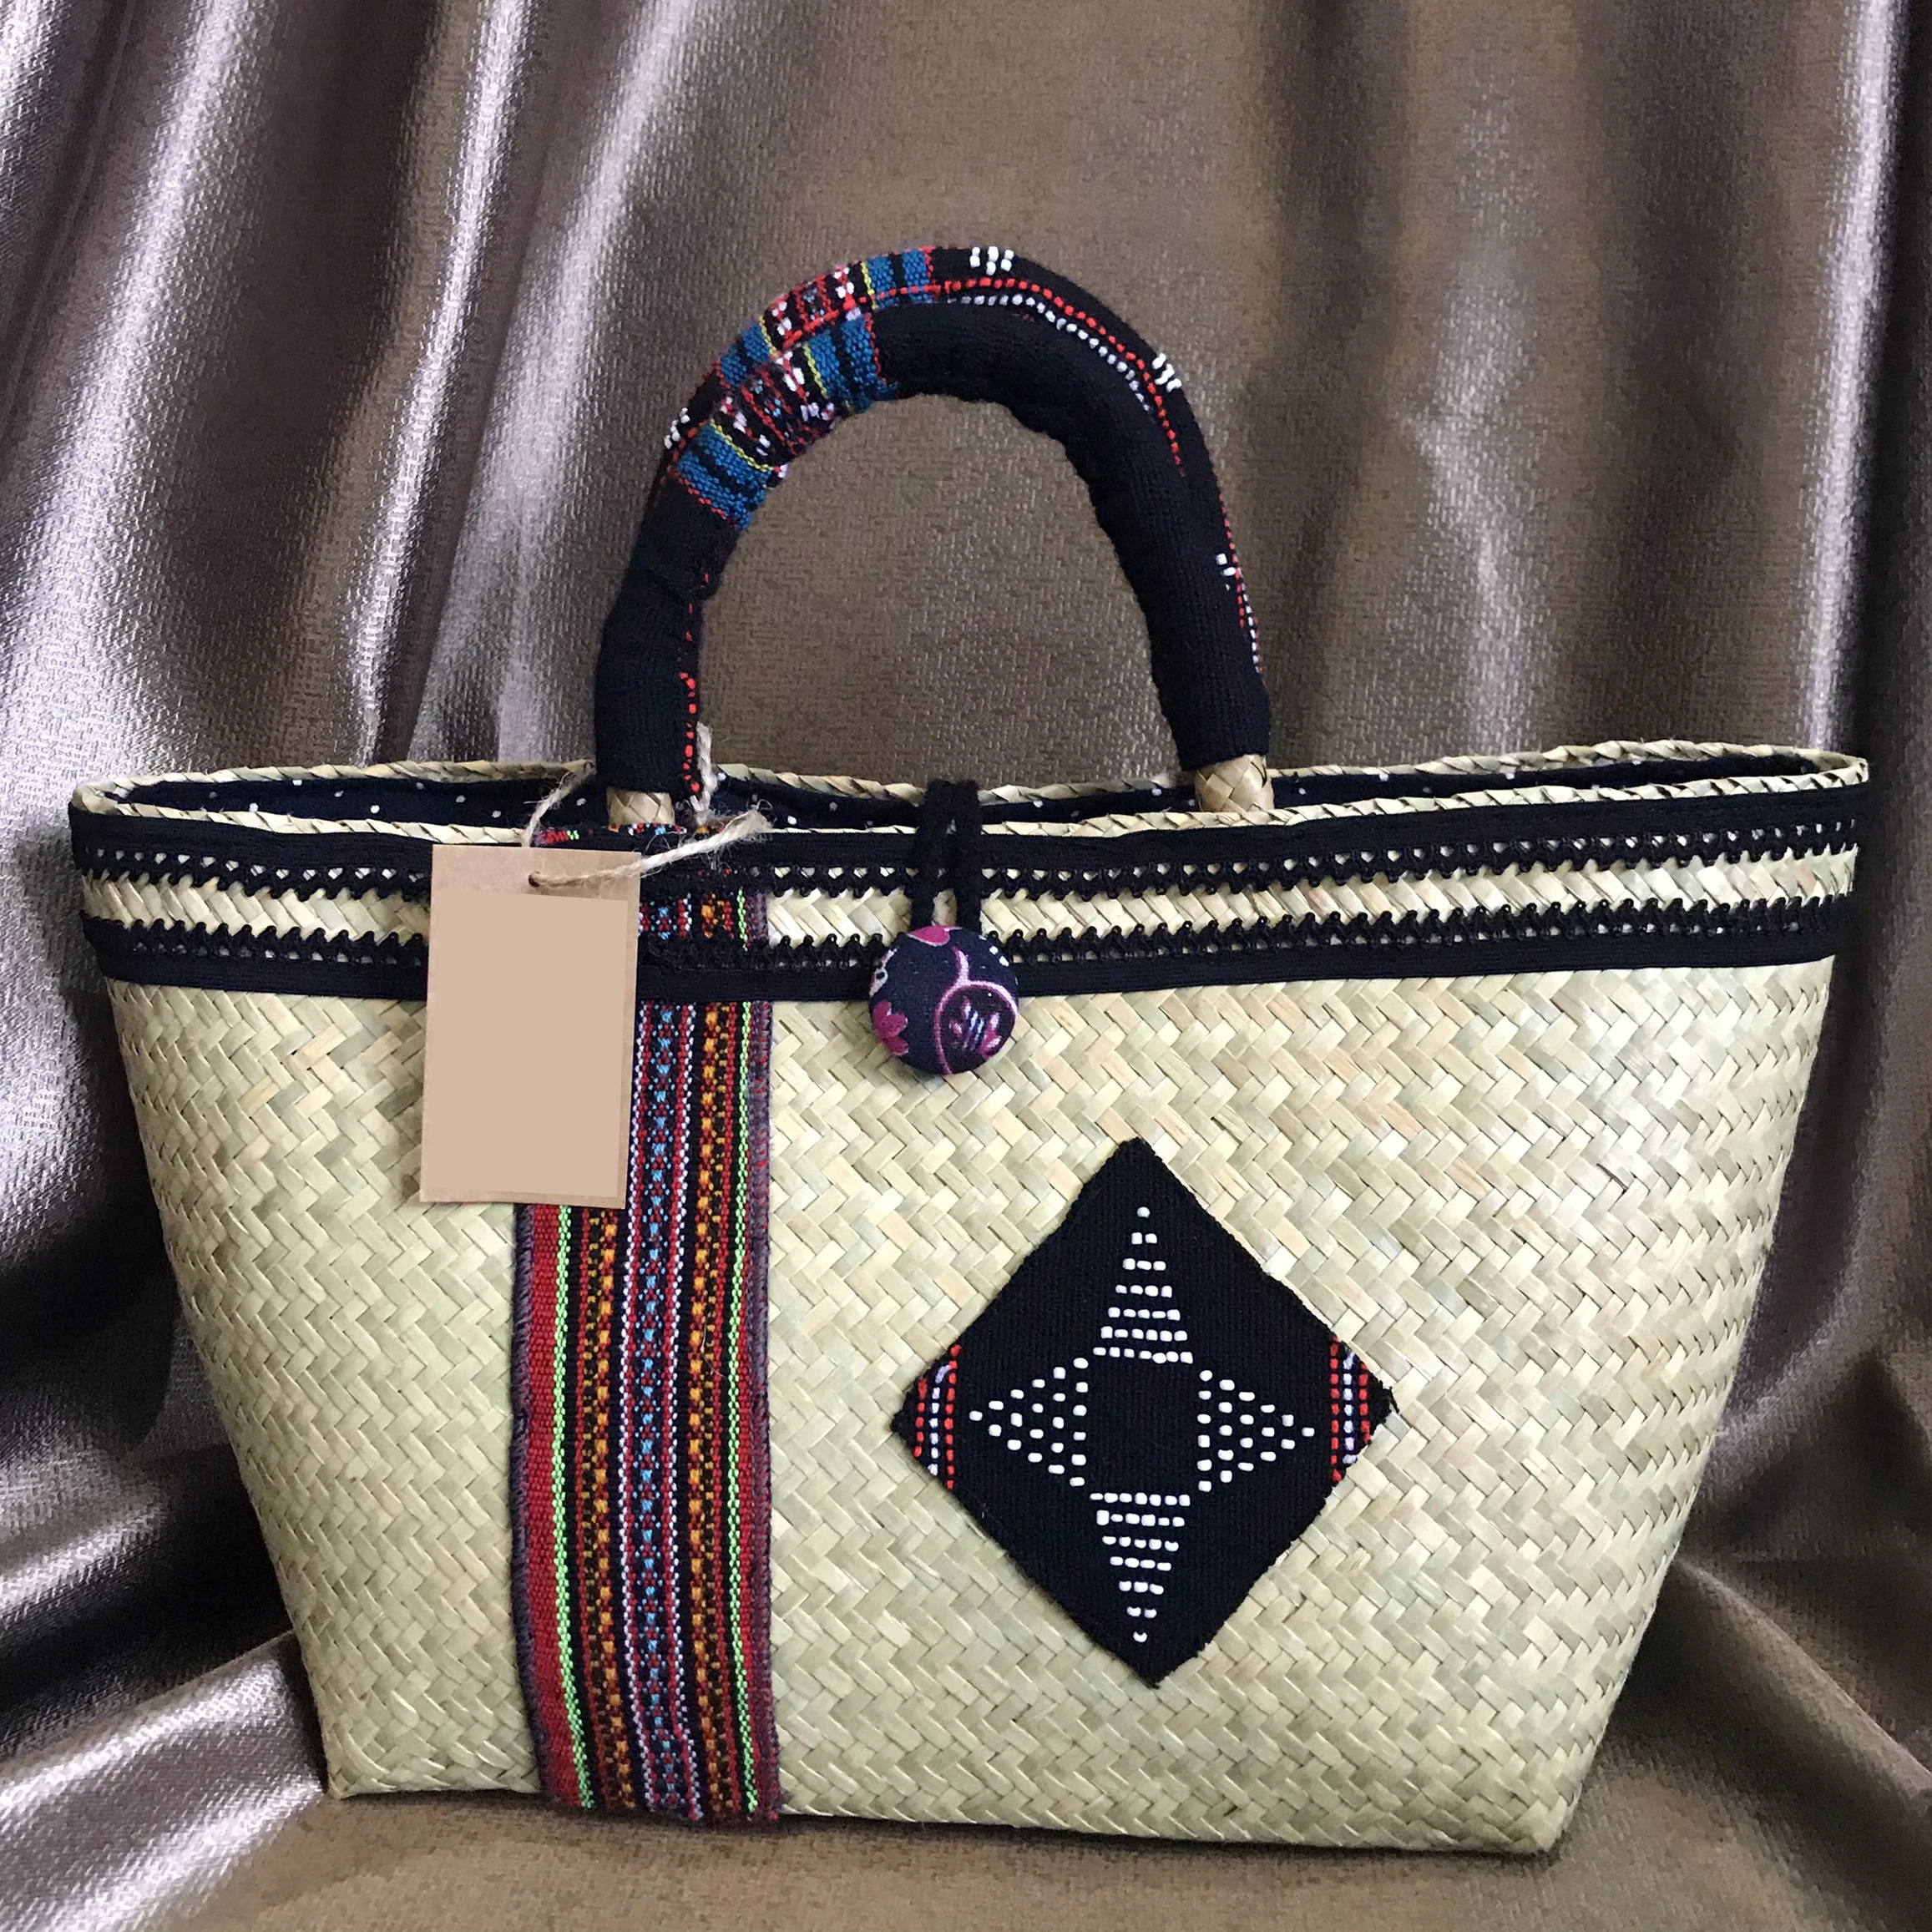 New design sedge handbag on sale 76